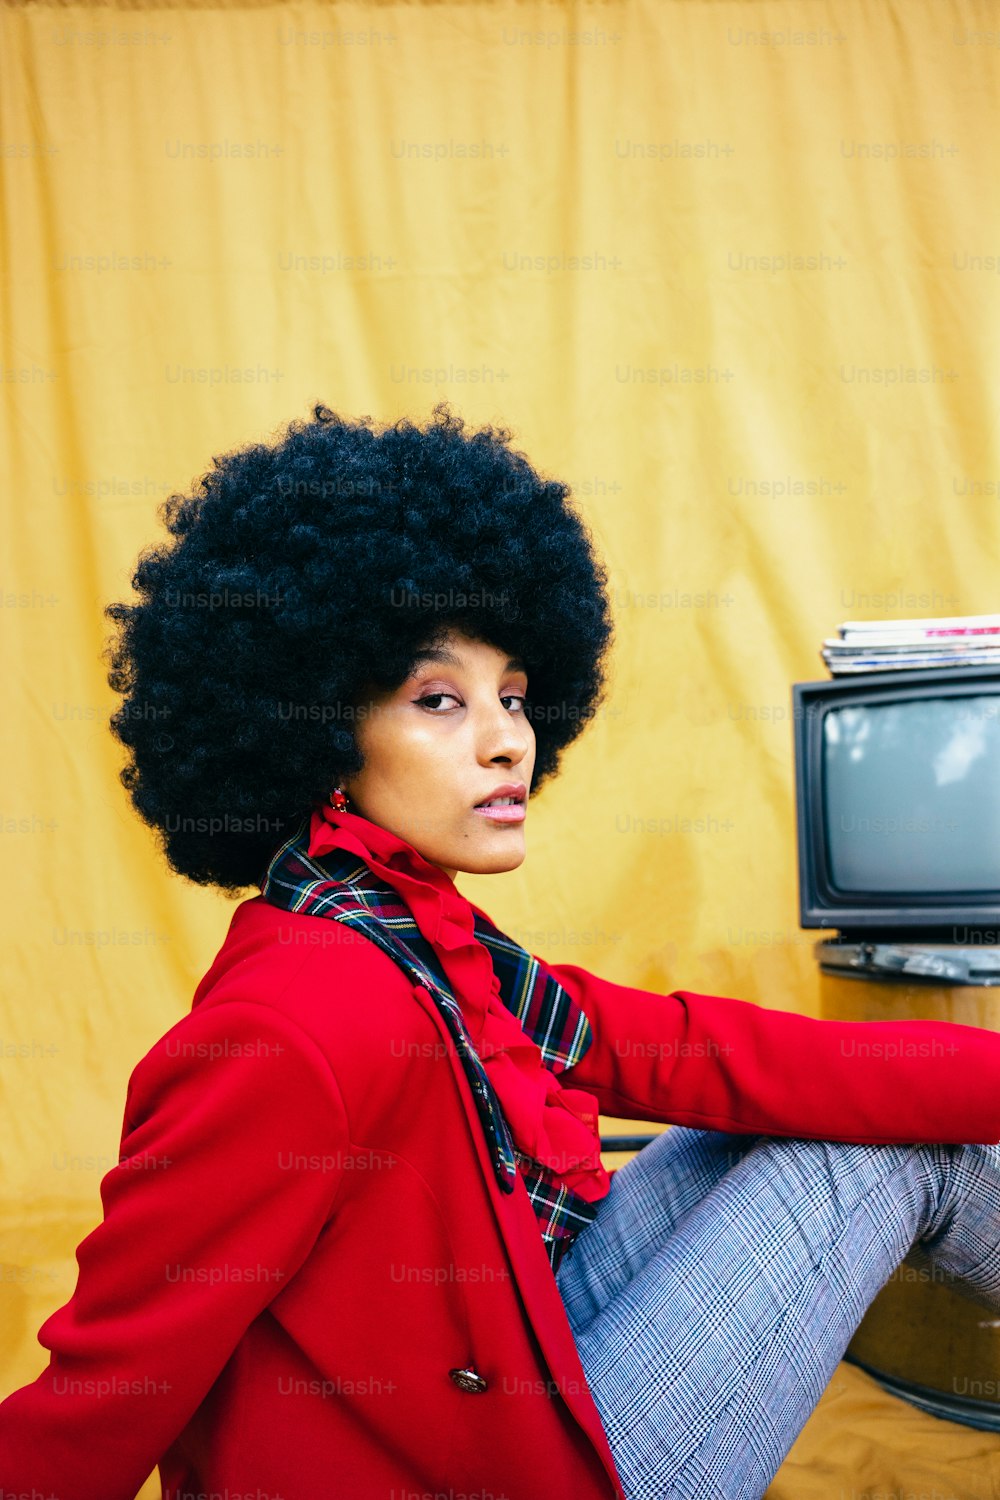 Una mujer con un afro sentada frente a un televisor